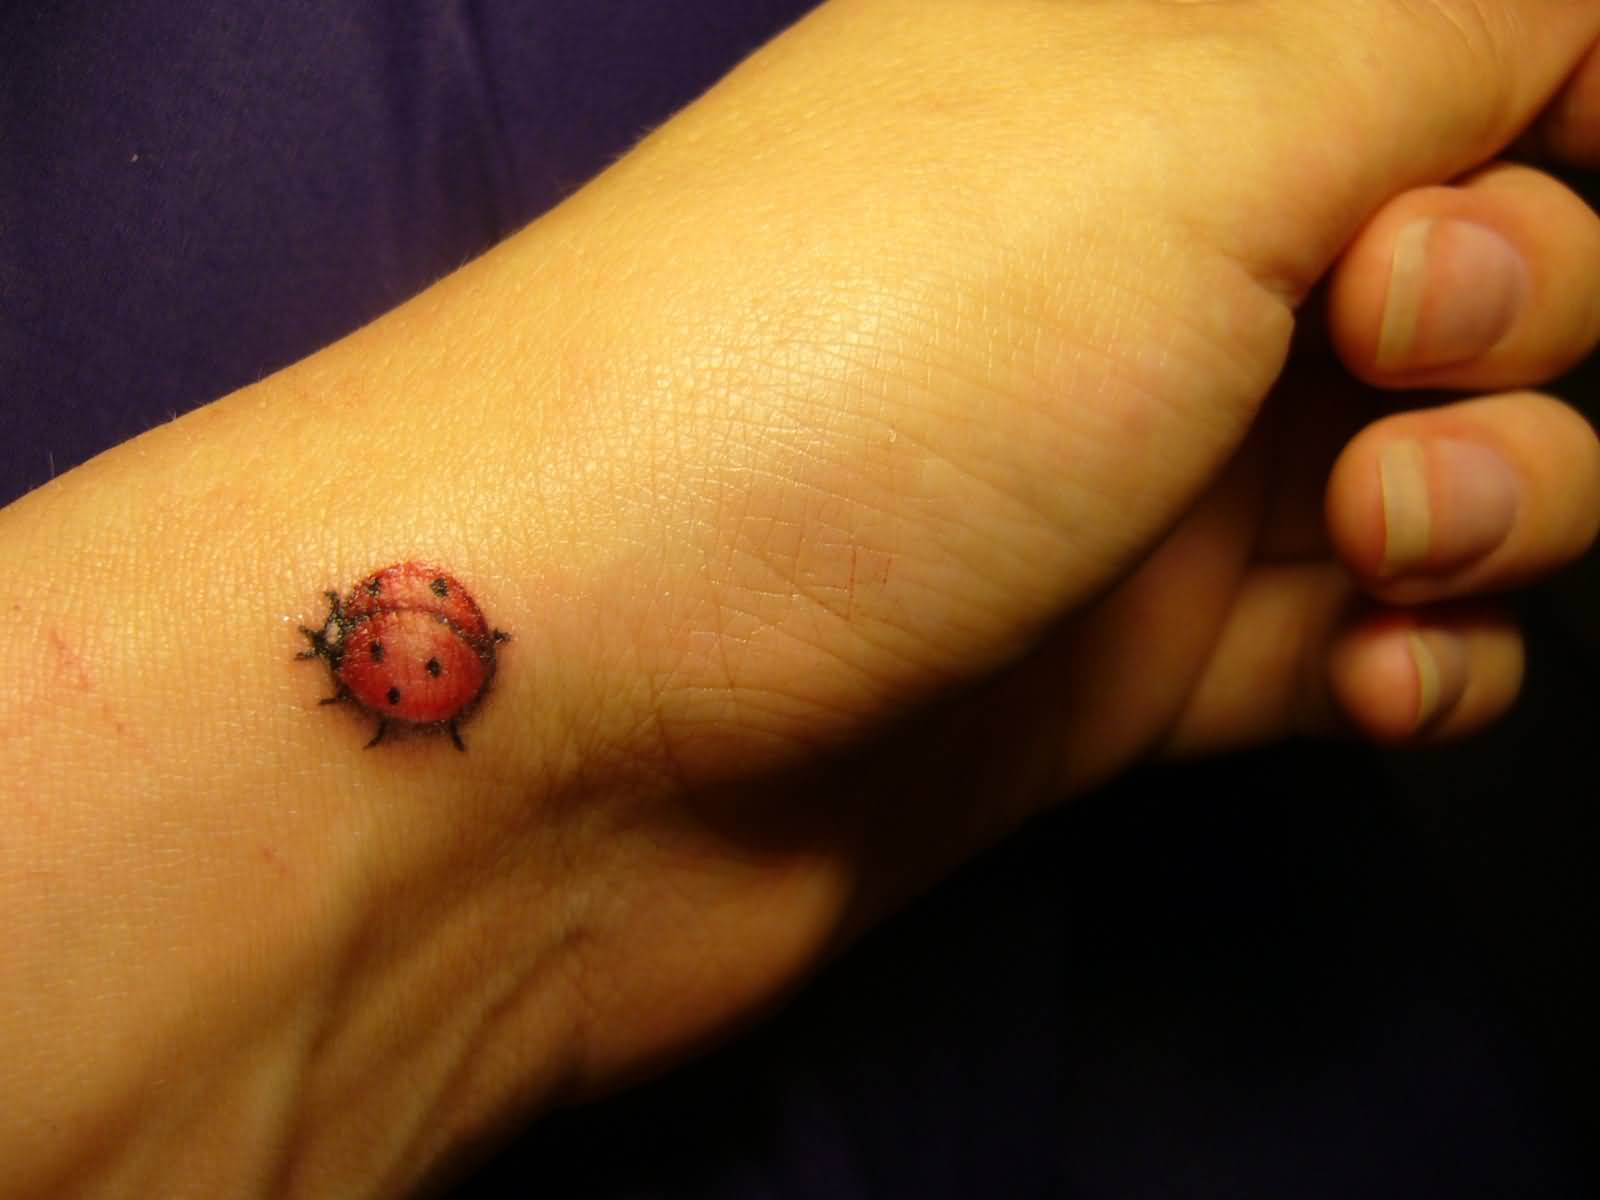 Lovely Red Ladybug Tattoo On Left Wrist